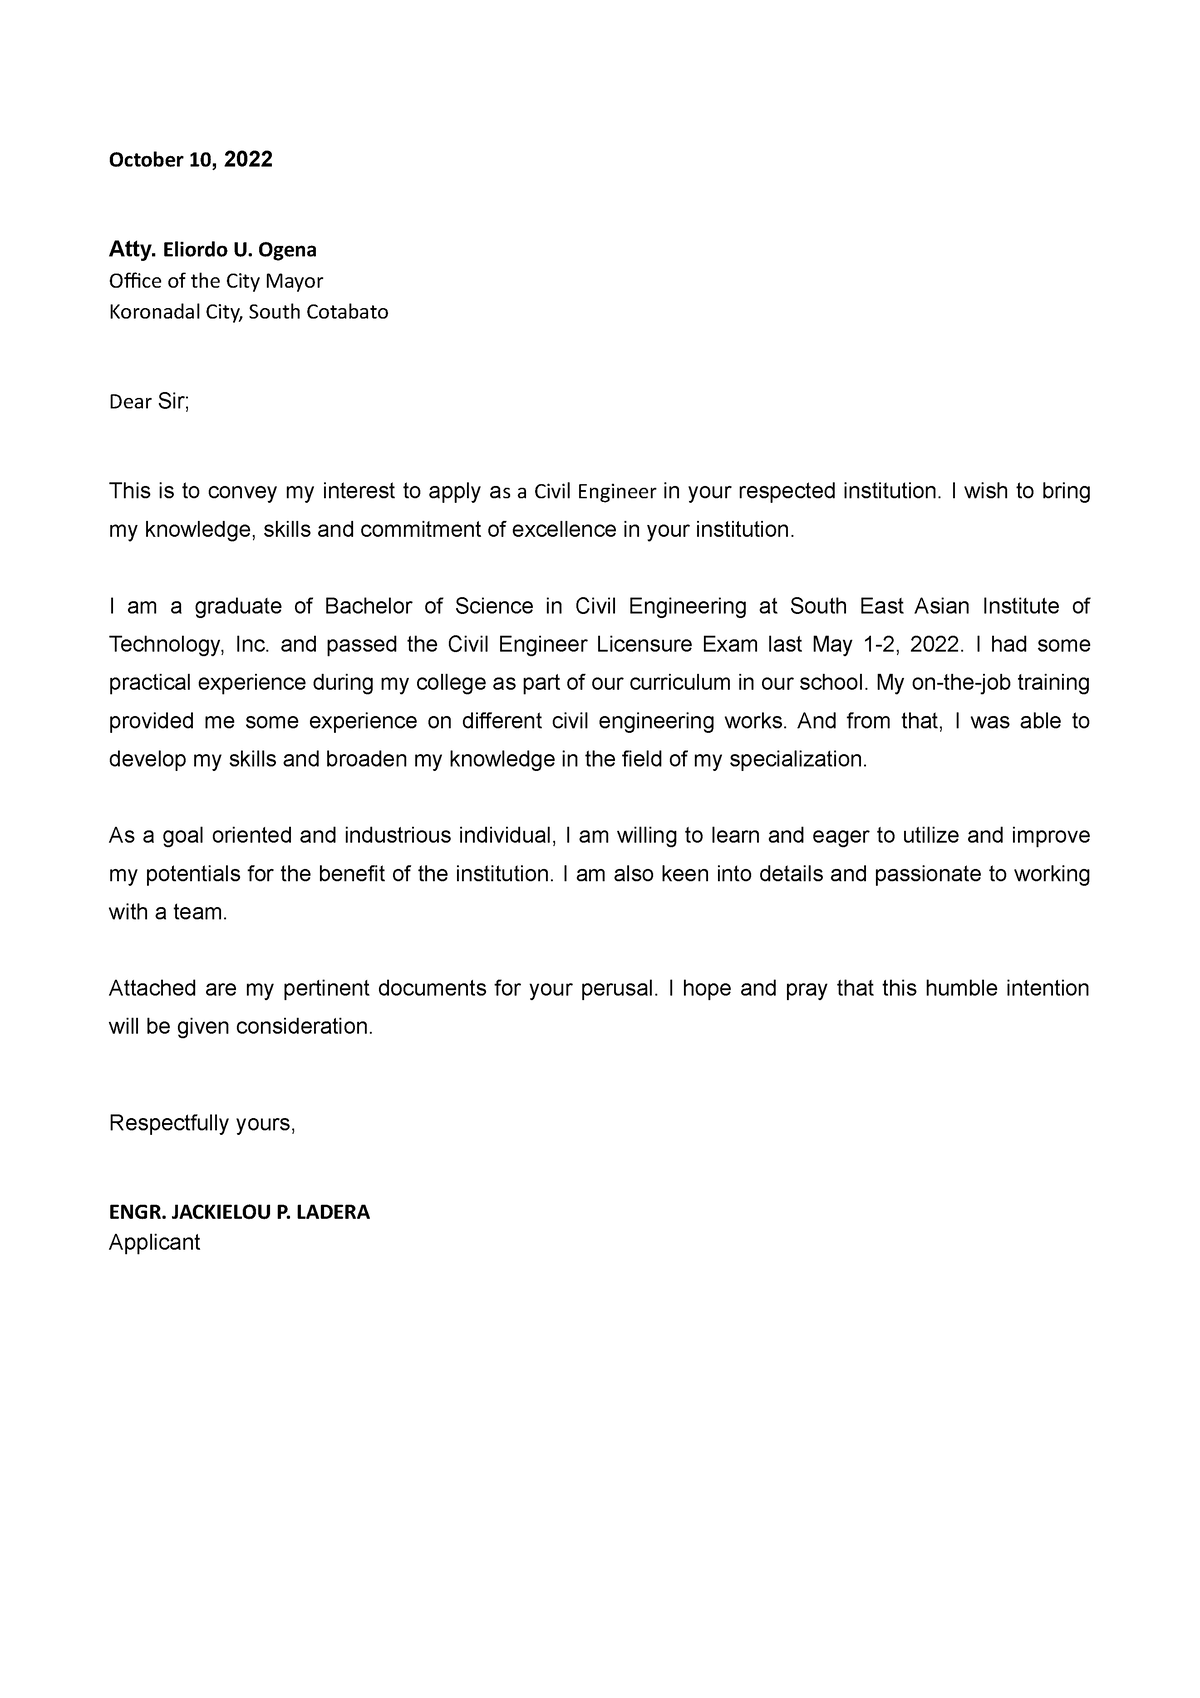 Jackie-application-letter - October 10, 2022 Atty. Eliordo U. Ogena ...